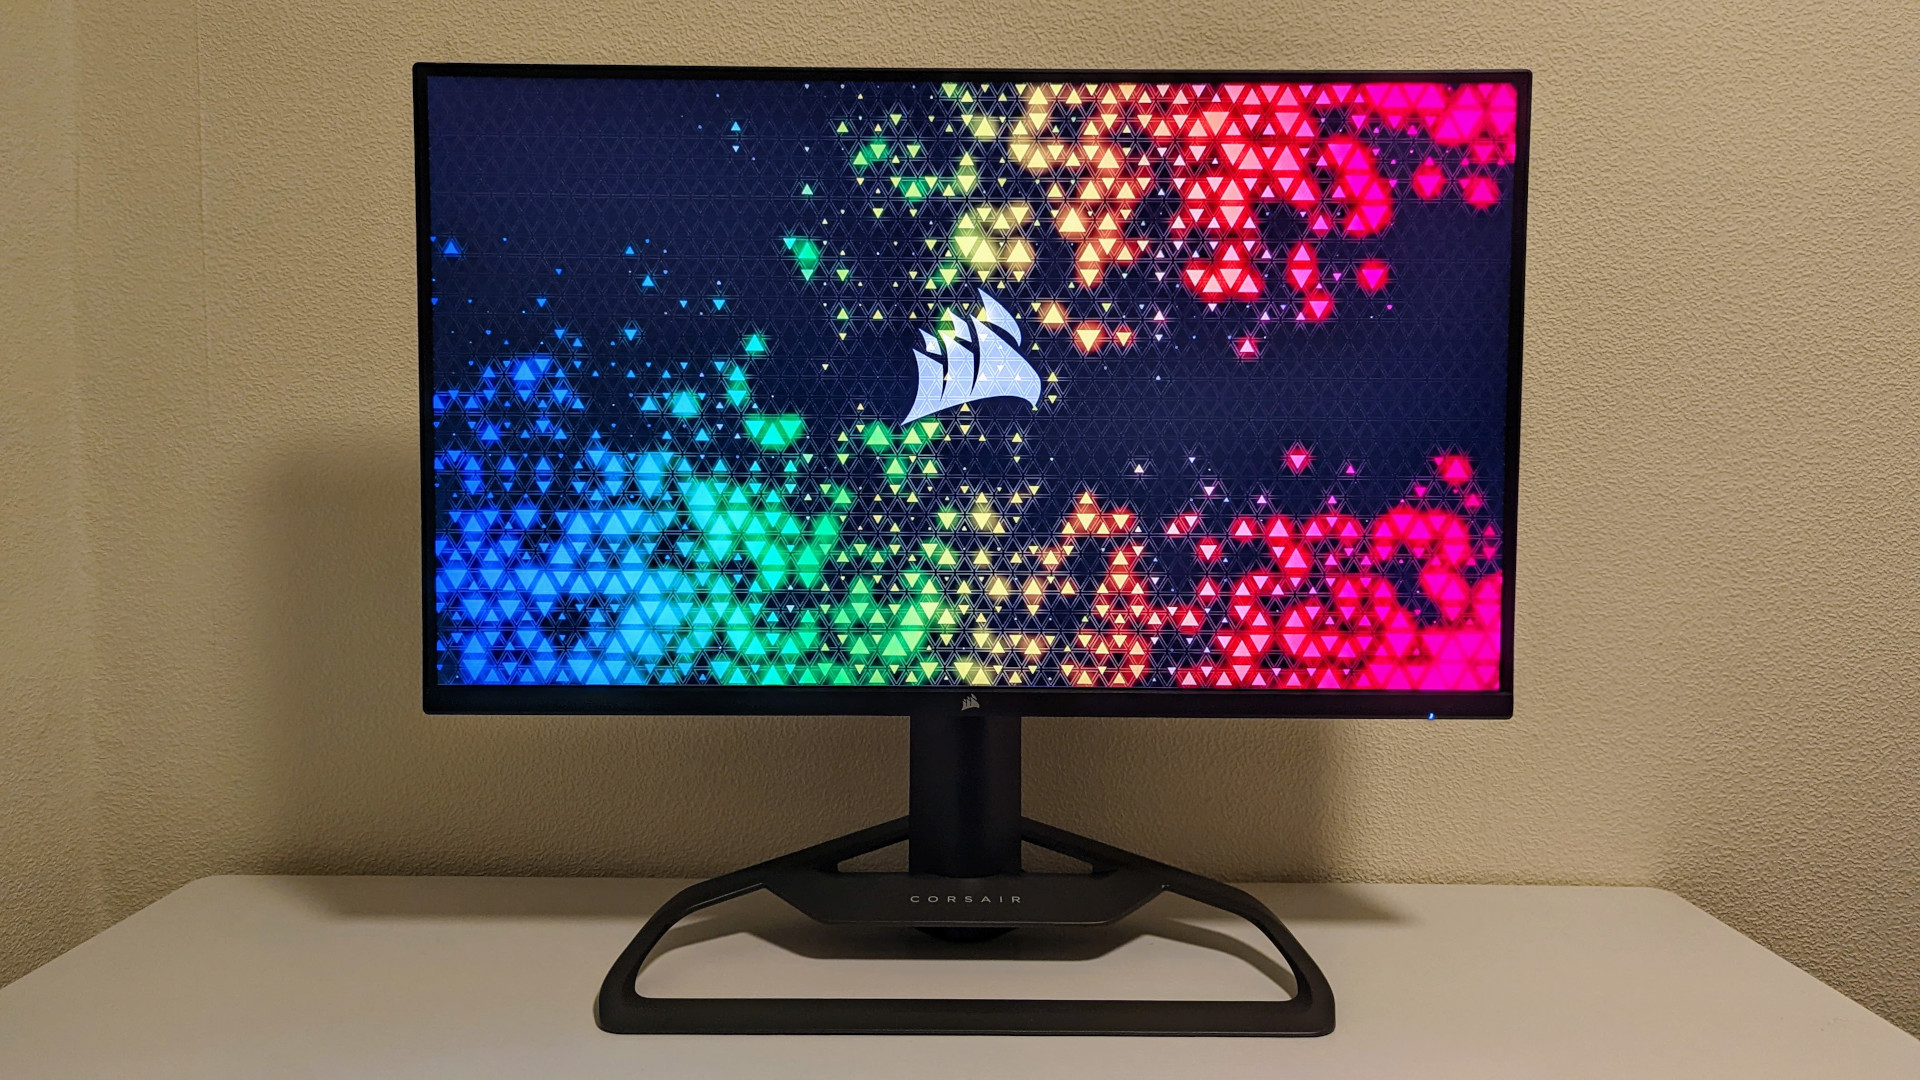 Corsair Xeneon 32UHD144 review – a solid 4K gaming monitor